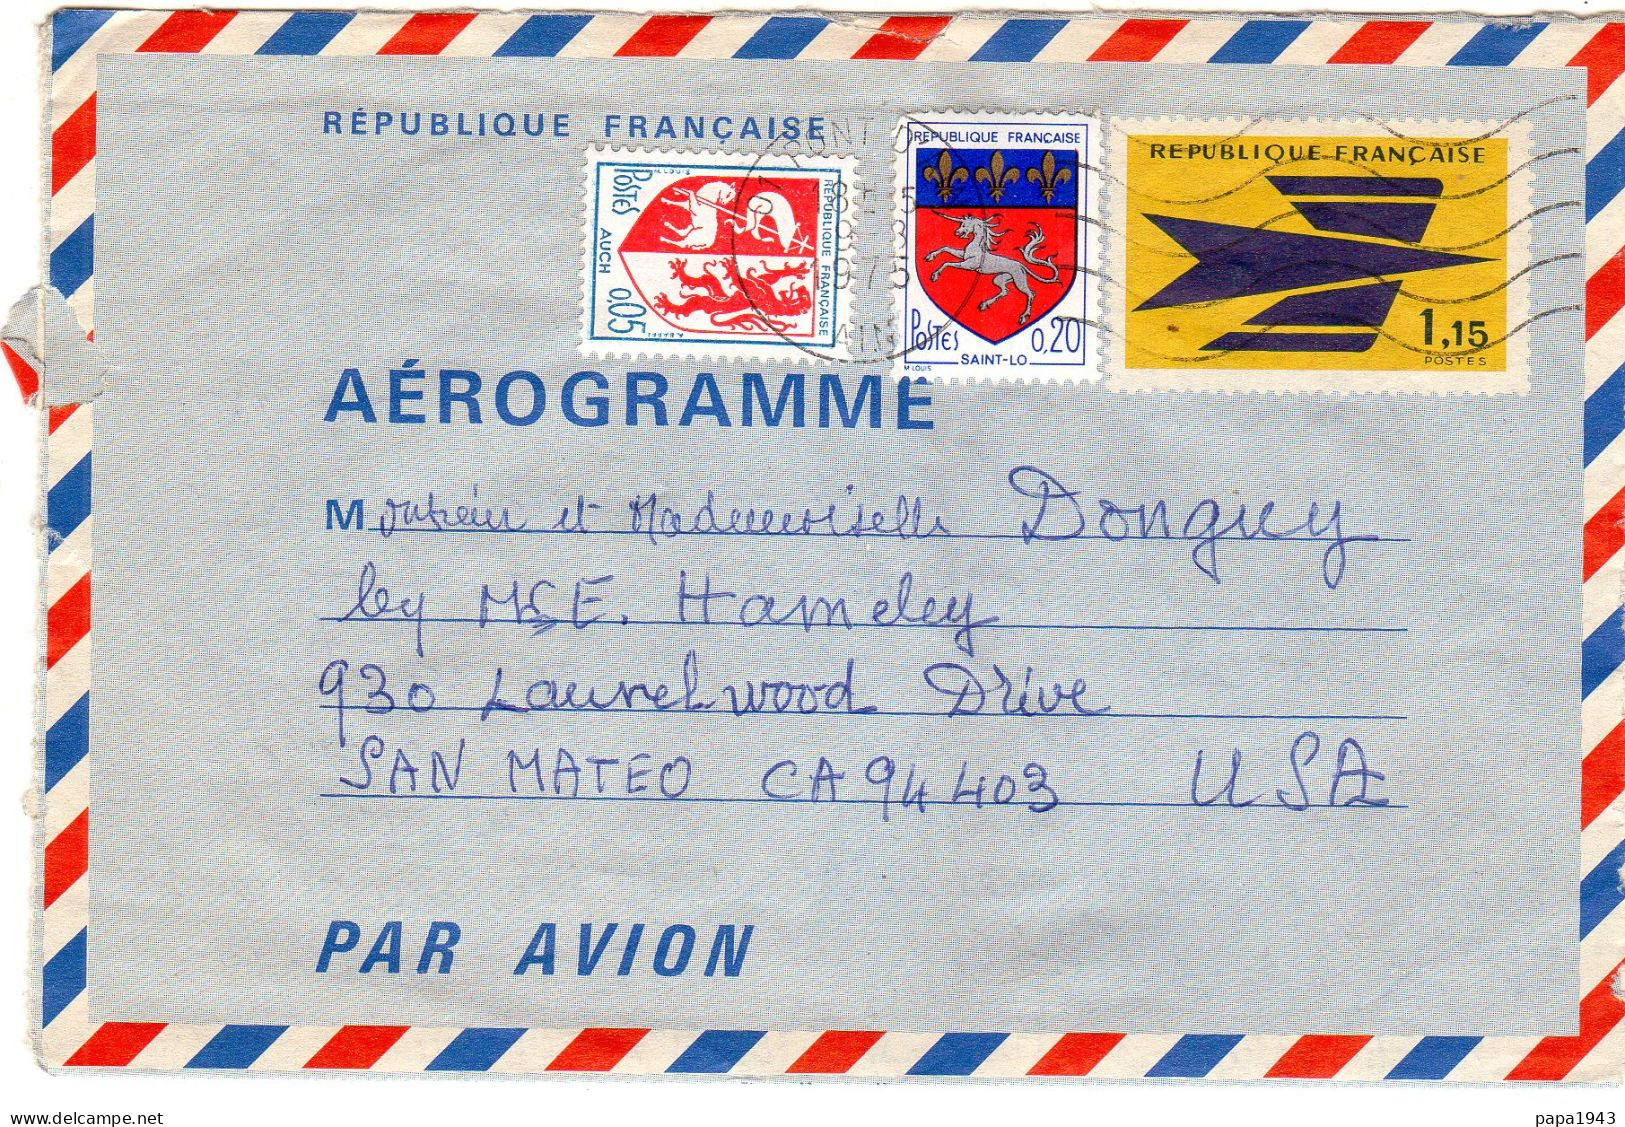 1975  AEROGRAMME  Timbres  Blasons Auch 0,05 + St LO 0,20 + 1,15 Envoyée à SAN MATEO U S A - Luchtpostbladen